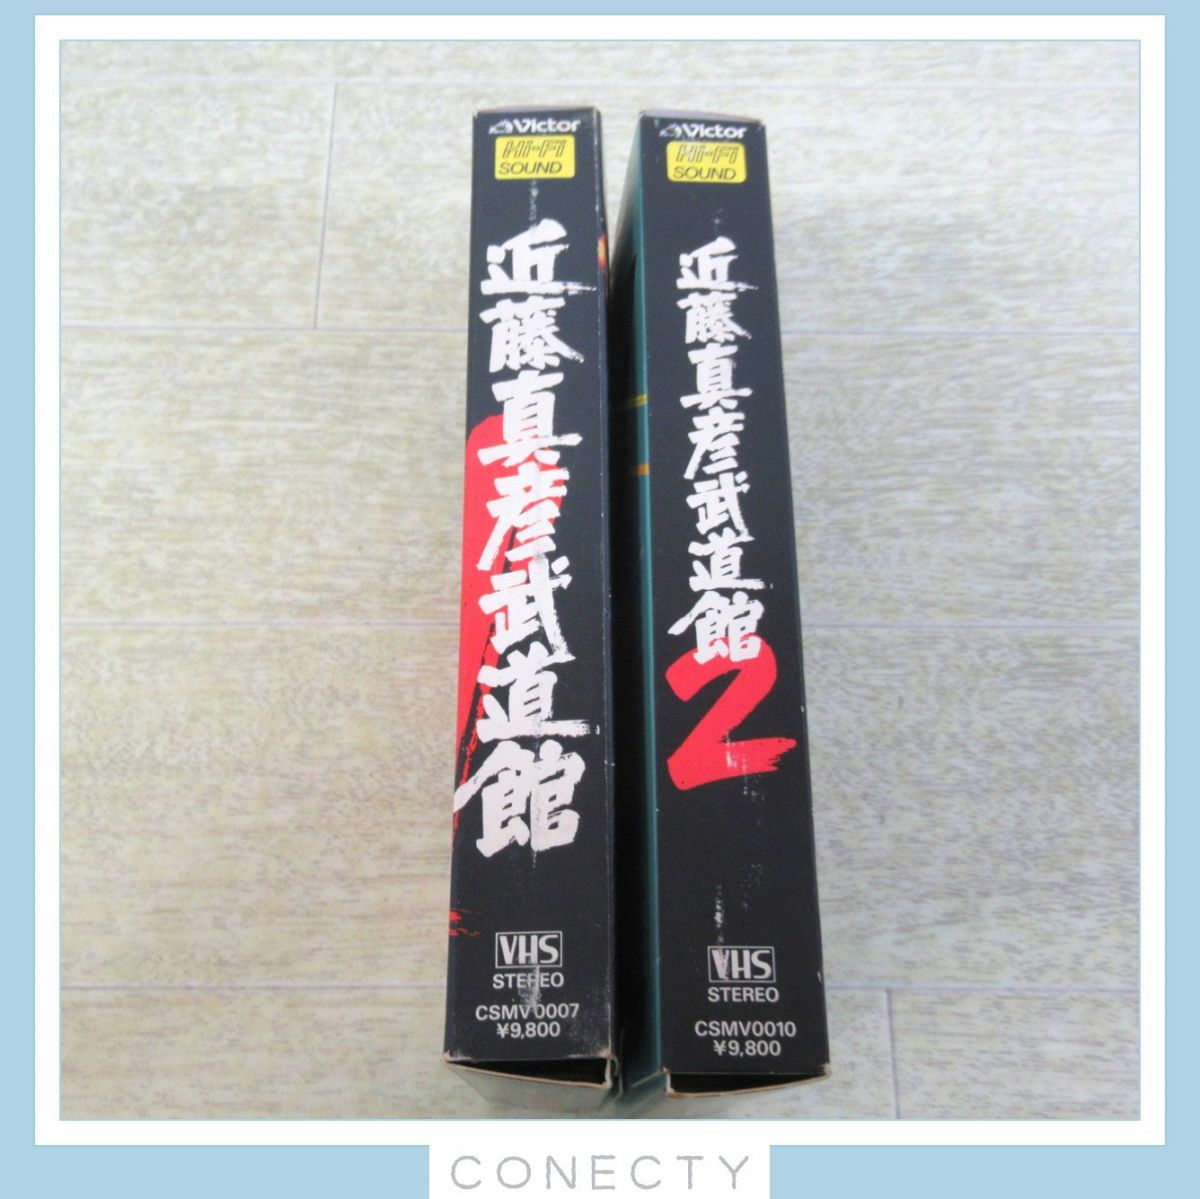 近藤真彦 武道館/近藤真彦 武道館2 VHS 2個セット 歌詞カード